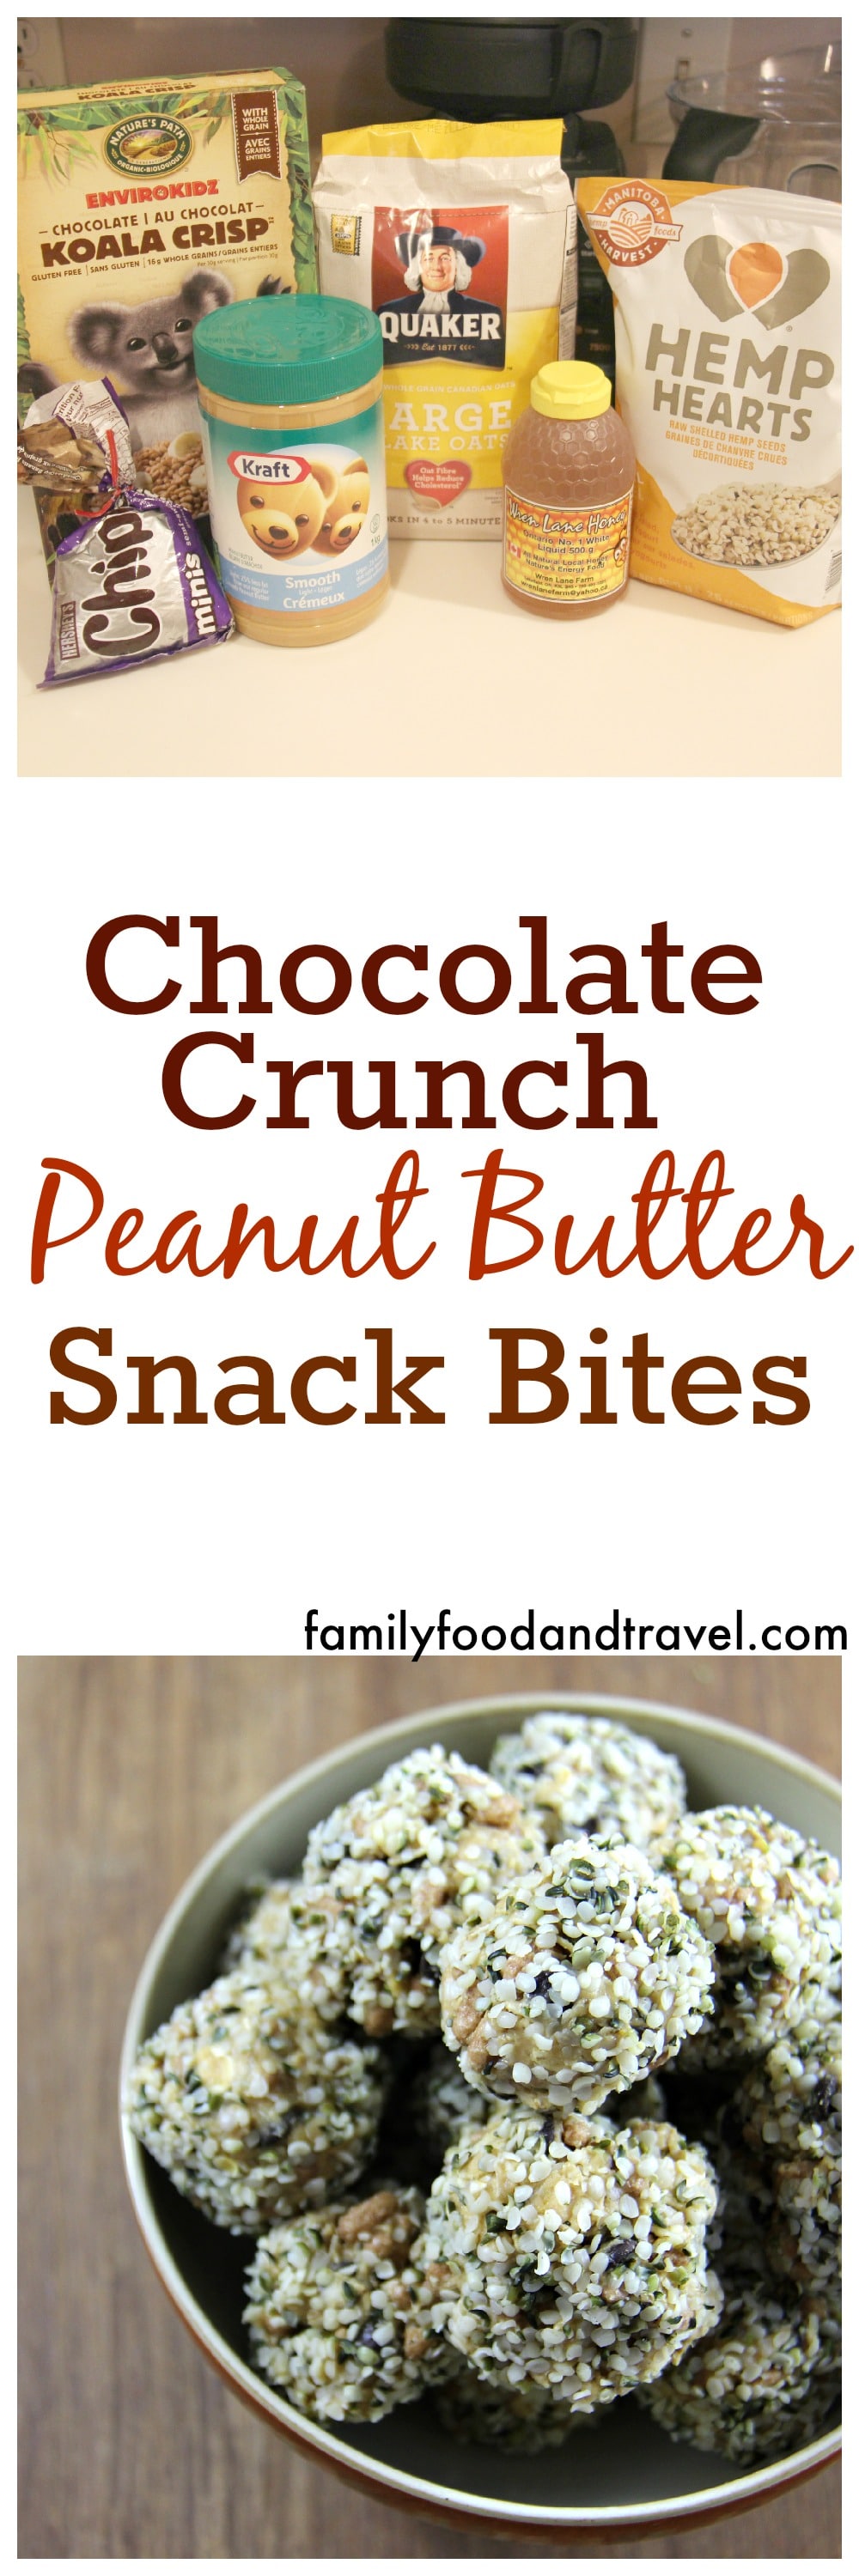 Chocolate Crunch Peanut Butter Snack Bites